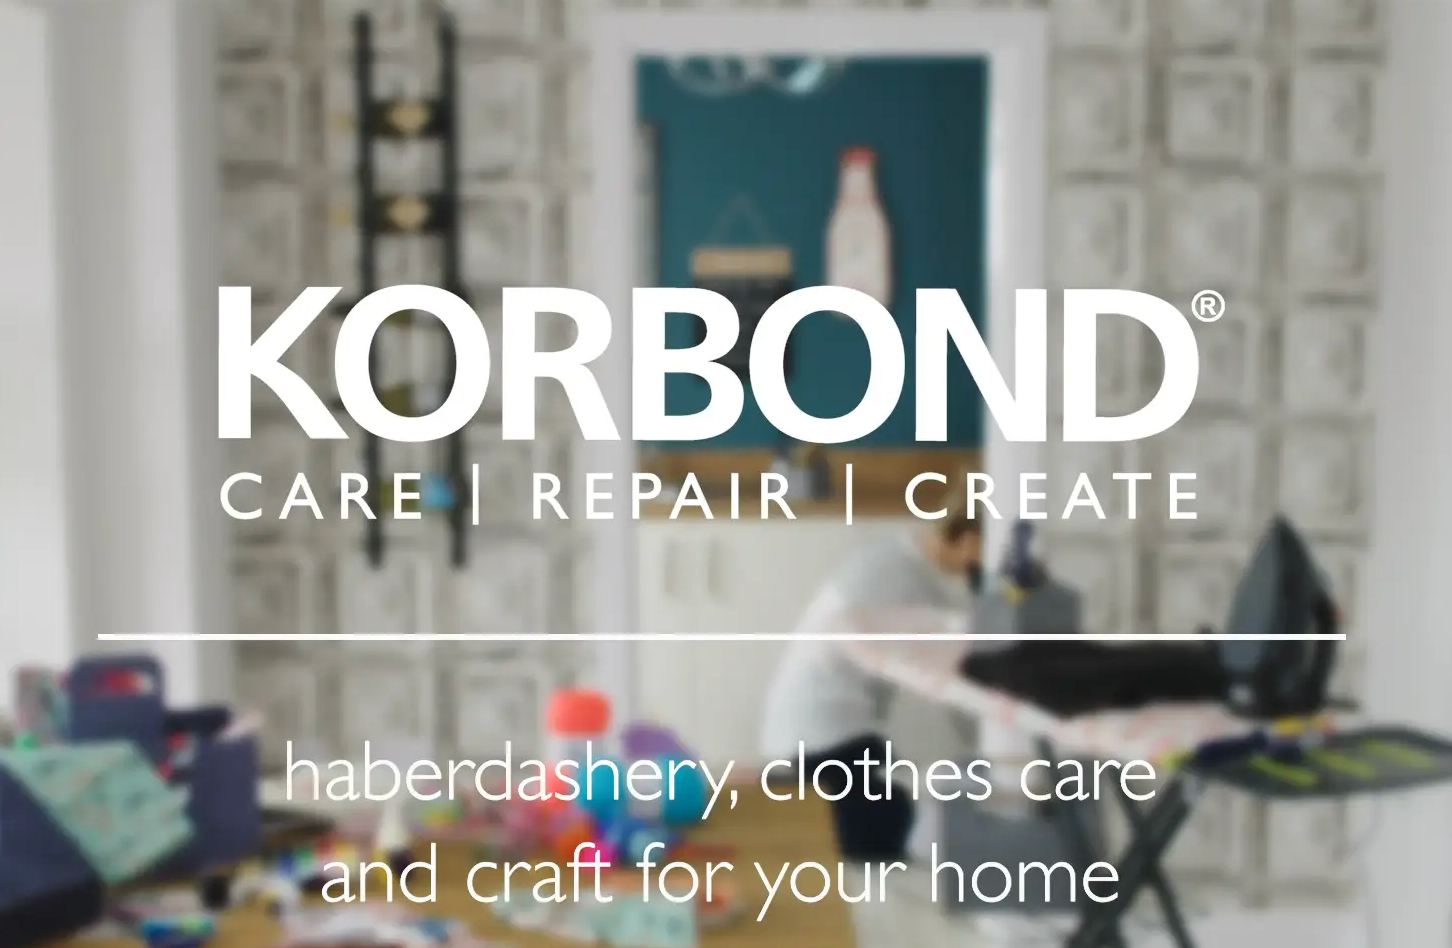 Korbond - Care | Repair | Create